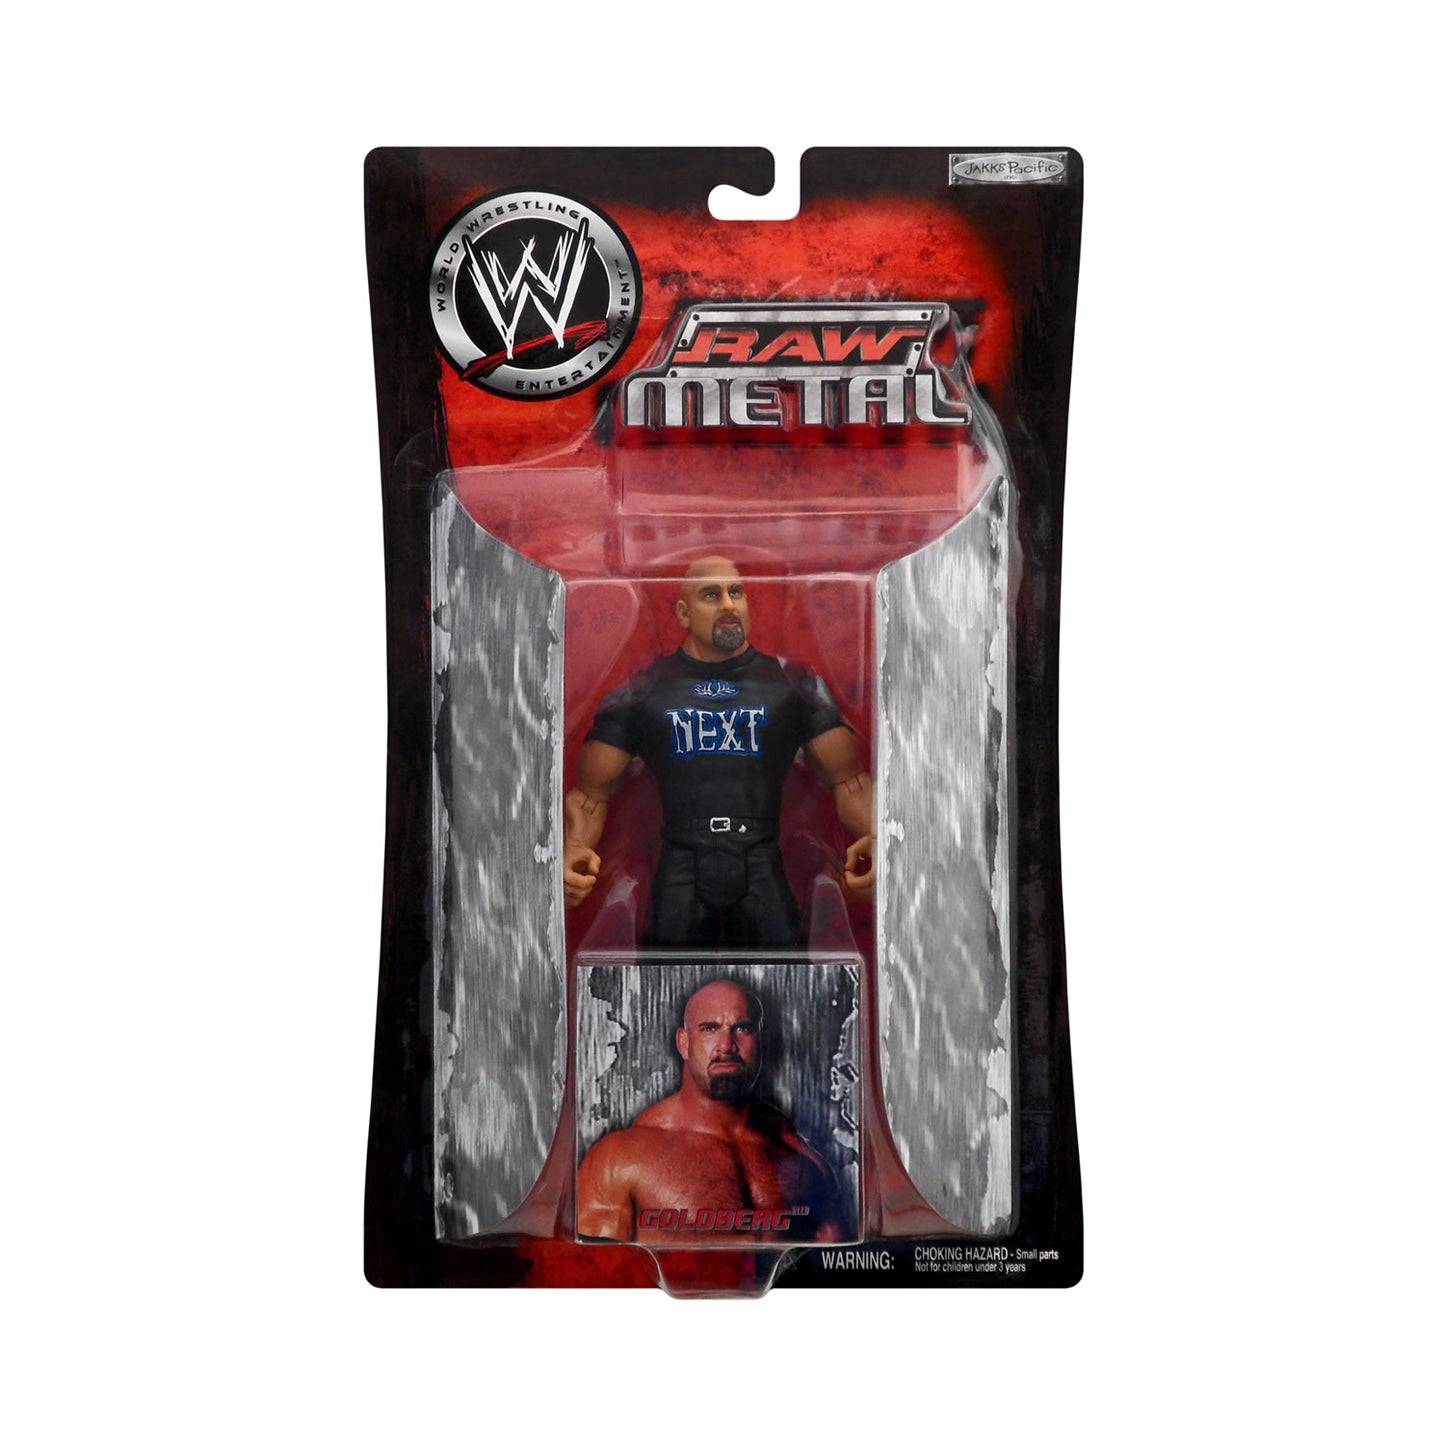 WWE Raw Metal Goldberg Action Figure